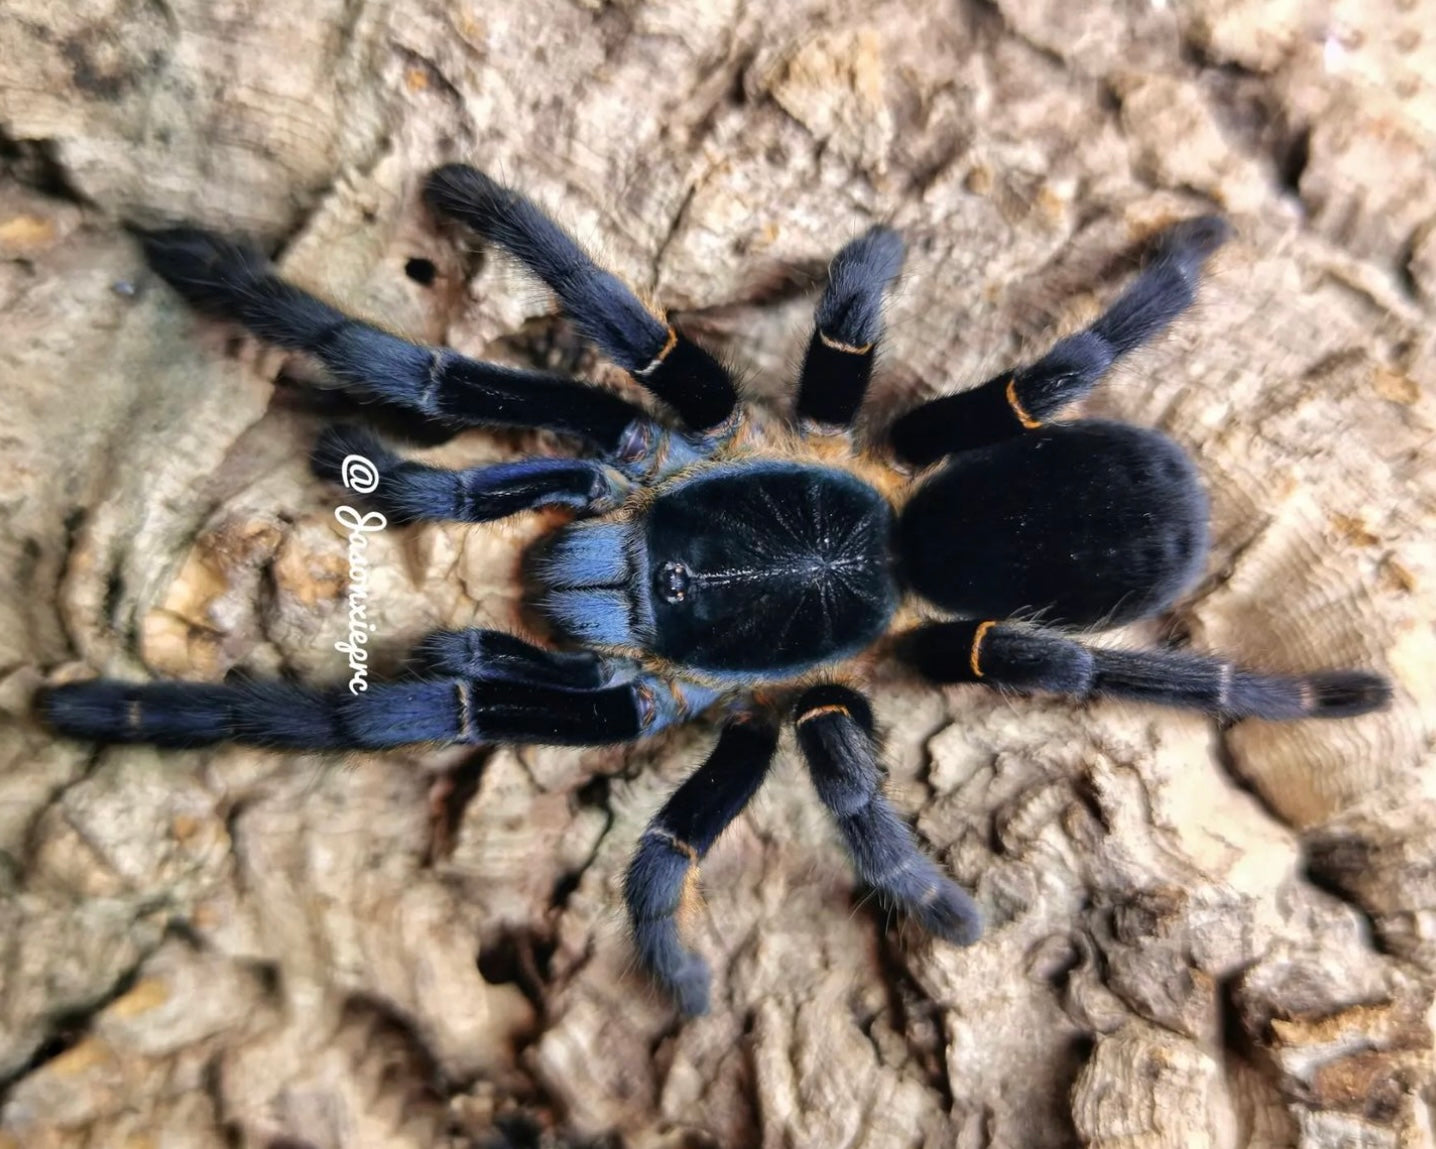 Ornithoctoninae sp. 'Ranong blue' (Ranong blue earth tiger tarantula) 1"